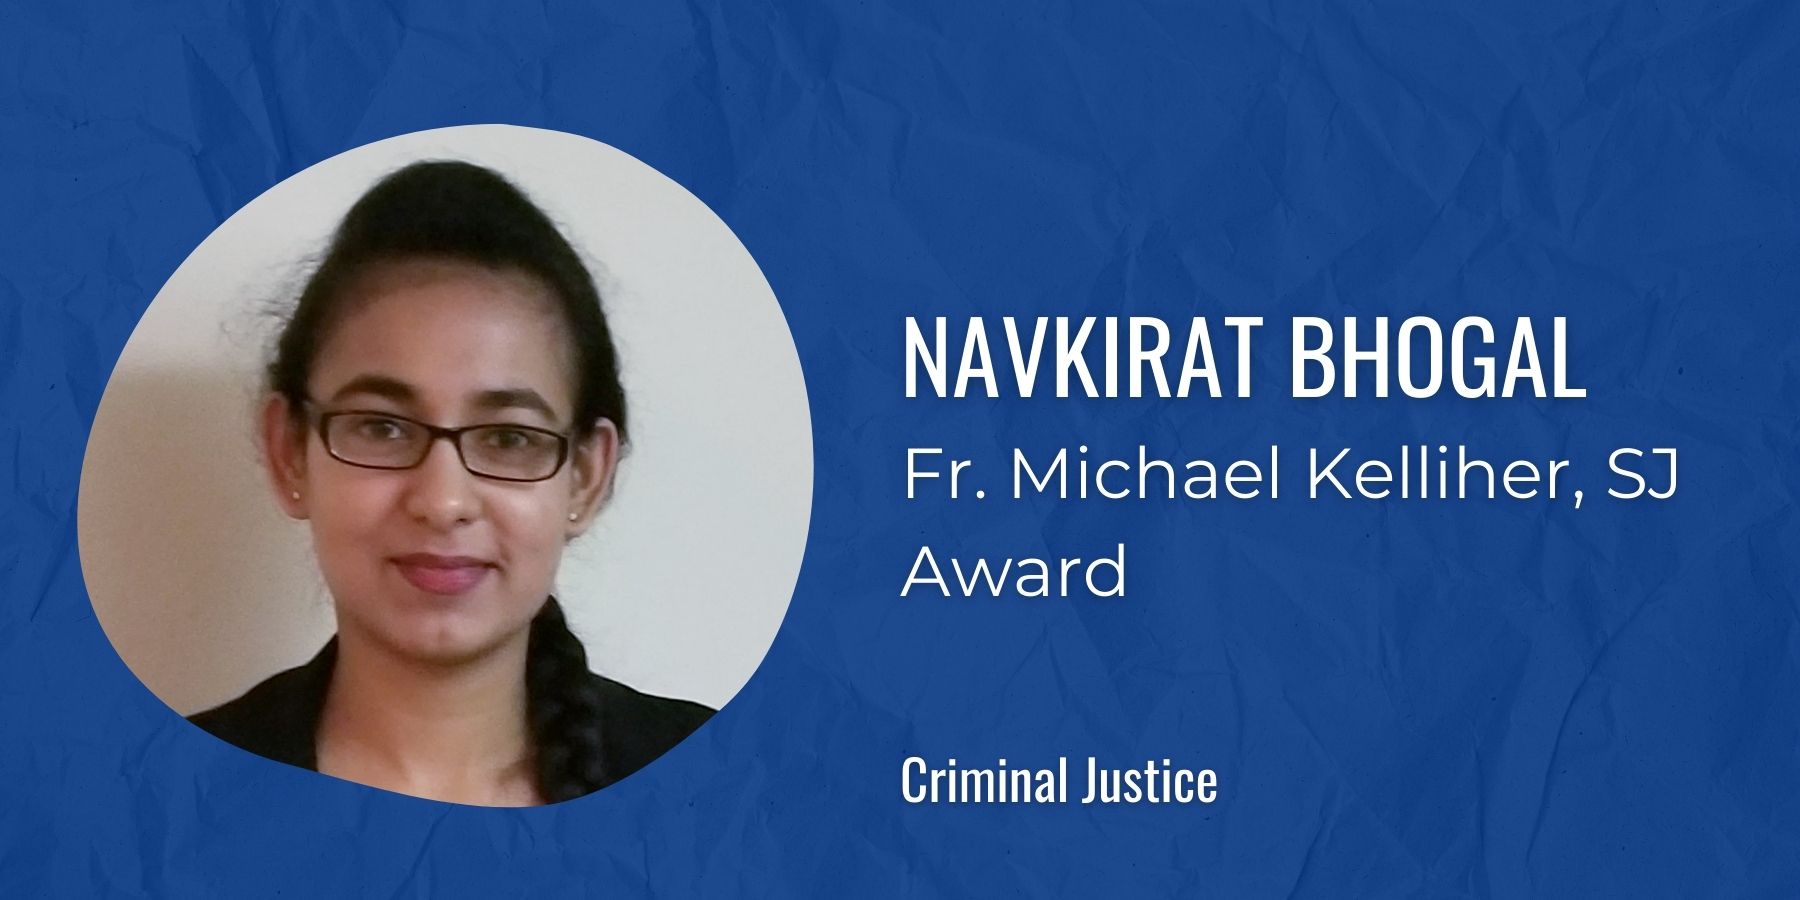 Image of Navkirat Bhogal with text: Fr. Michael Kelliher, SJ Award, Criminal Justice
